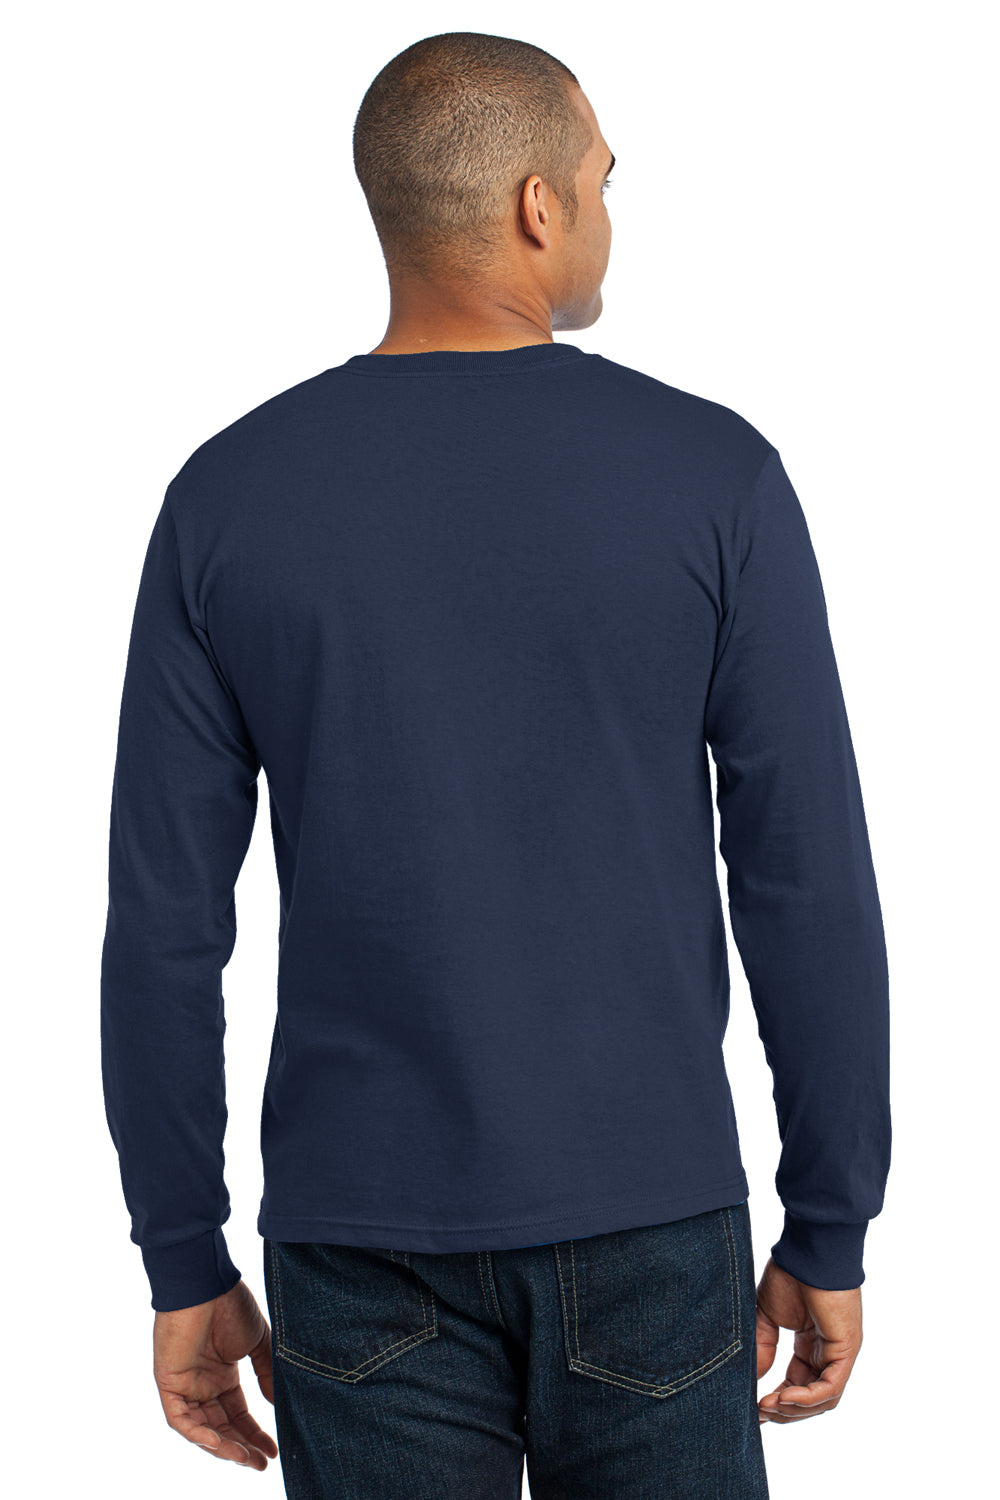 Port & Company USA100LS Mens USA Made Long Sleeve Crewneck T-Shirt Navy Blue Back